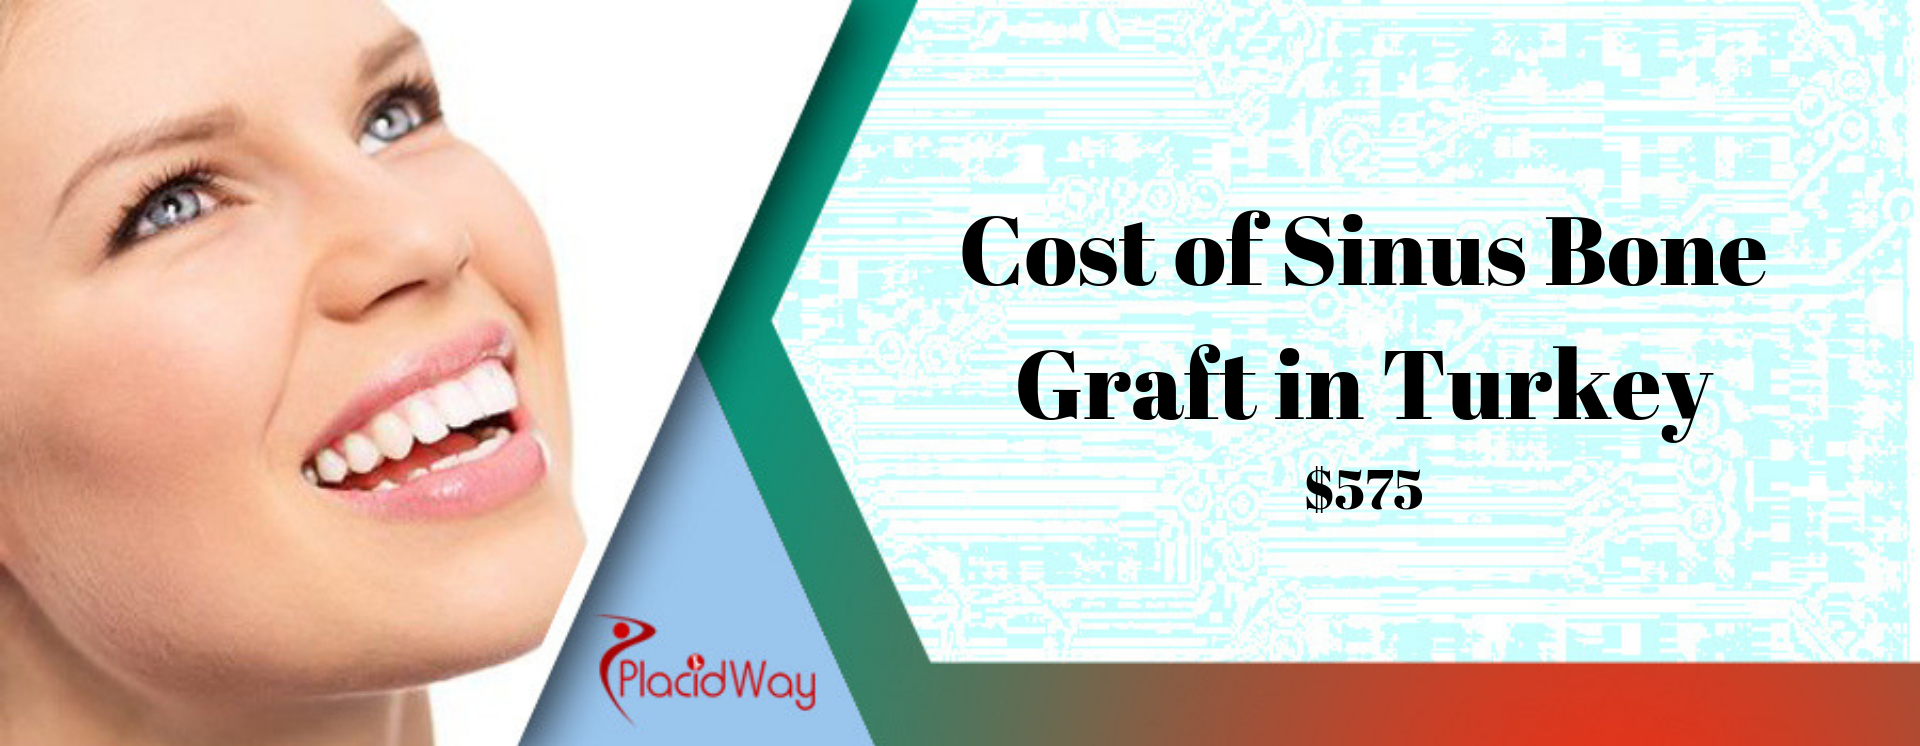 Cost of Sinus Bone Graft